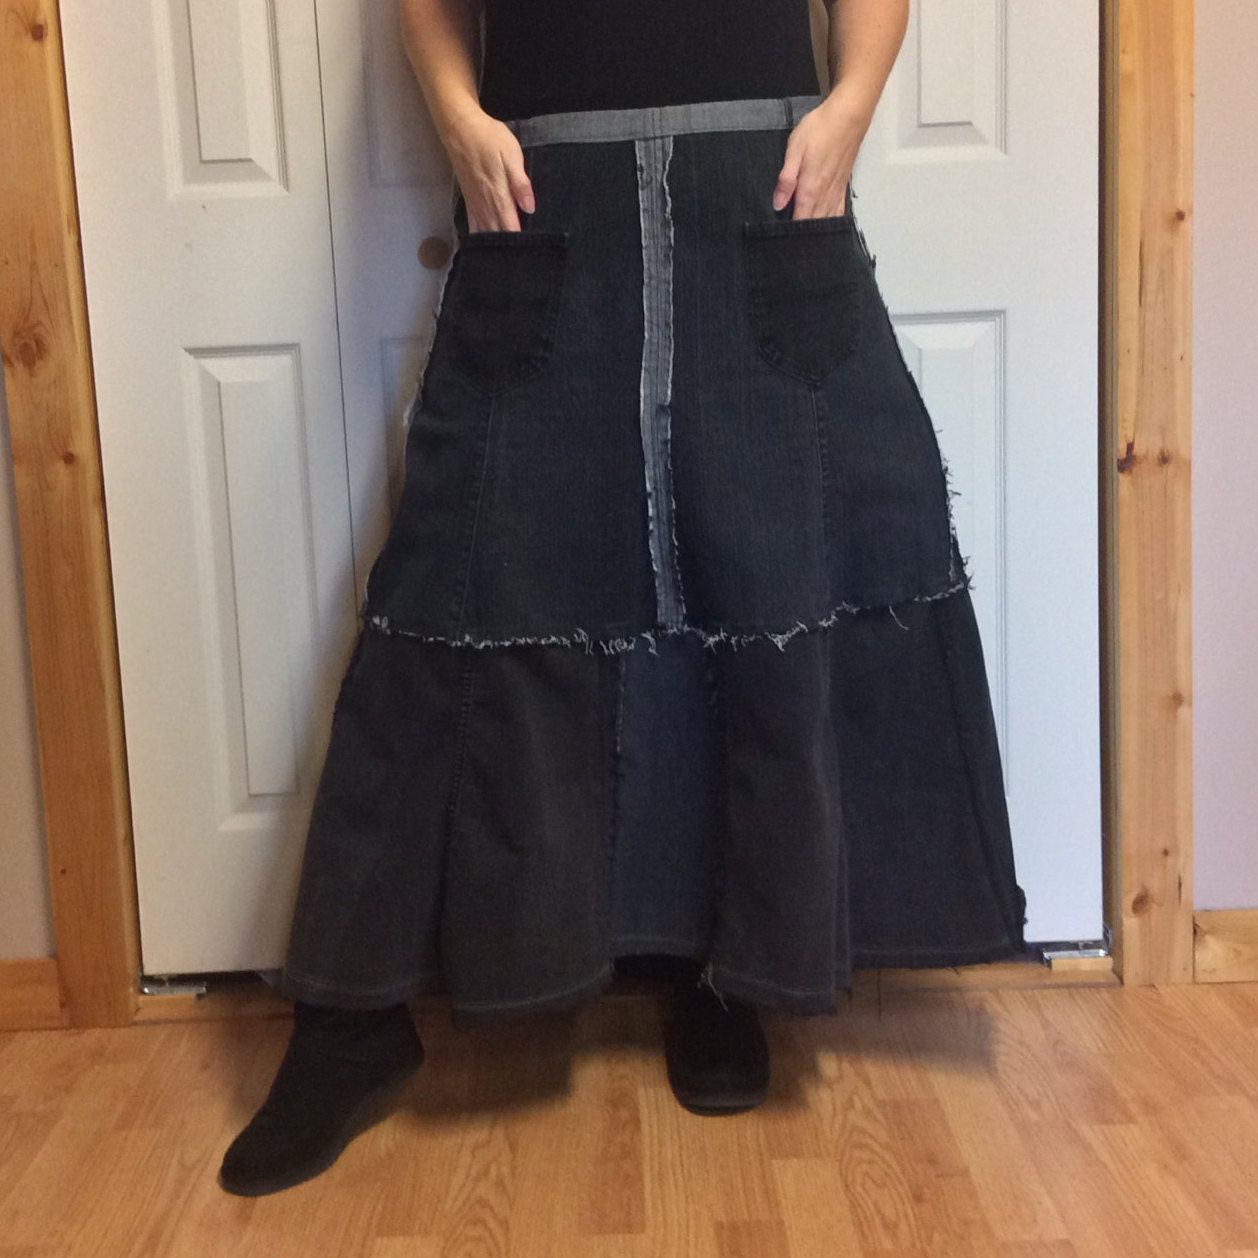 Long Black Denim Skirt Size 2XL/Patchwork Skirt with